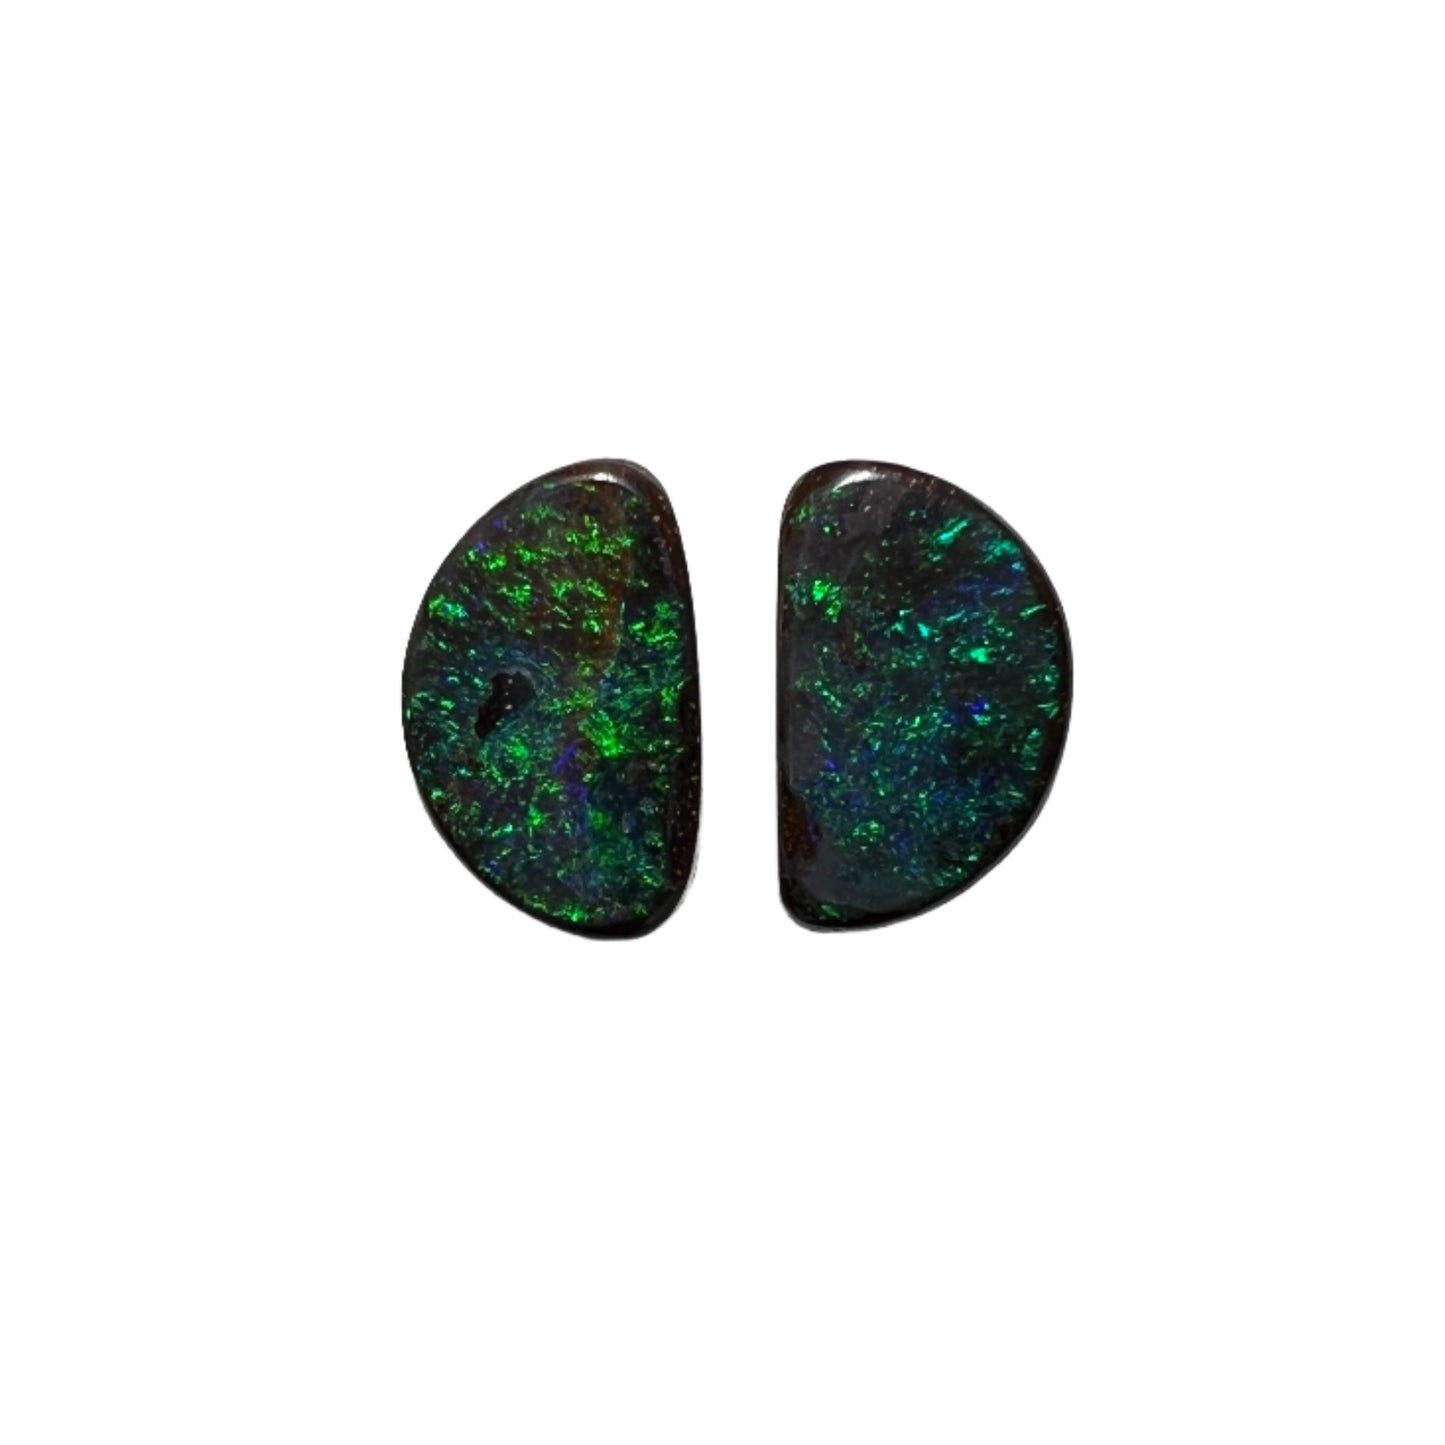 1.44 Ct boulder opal pair